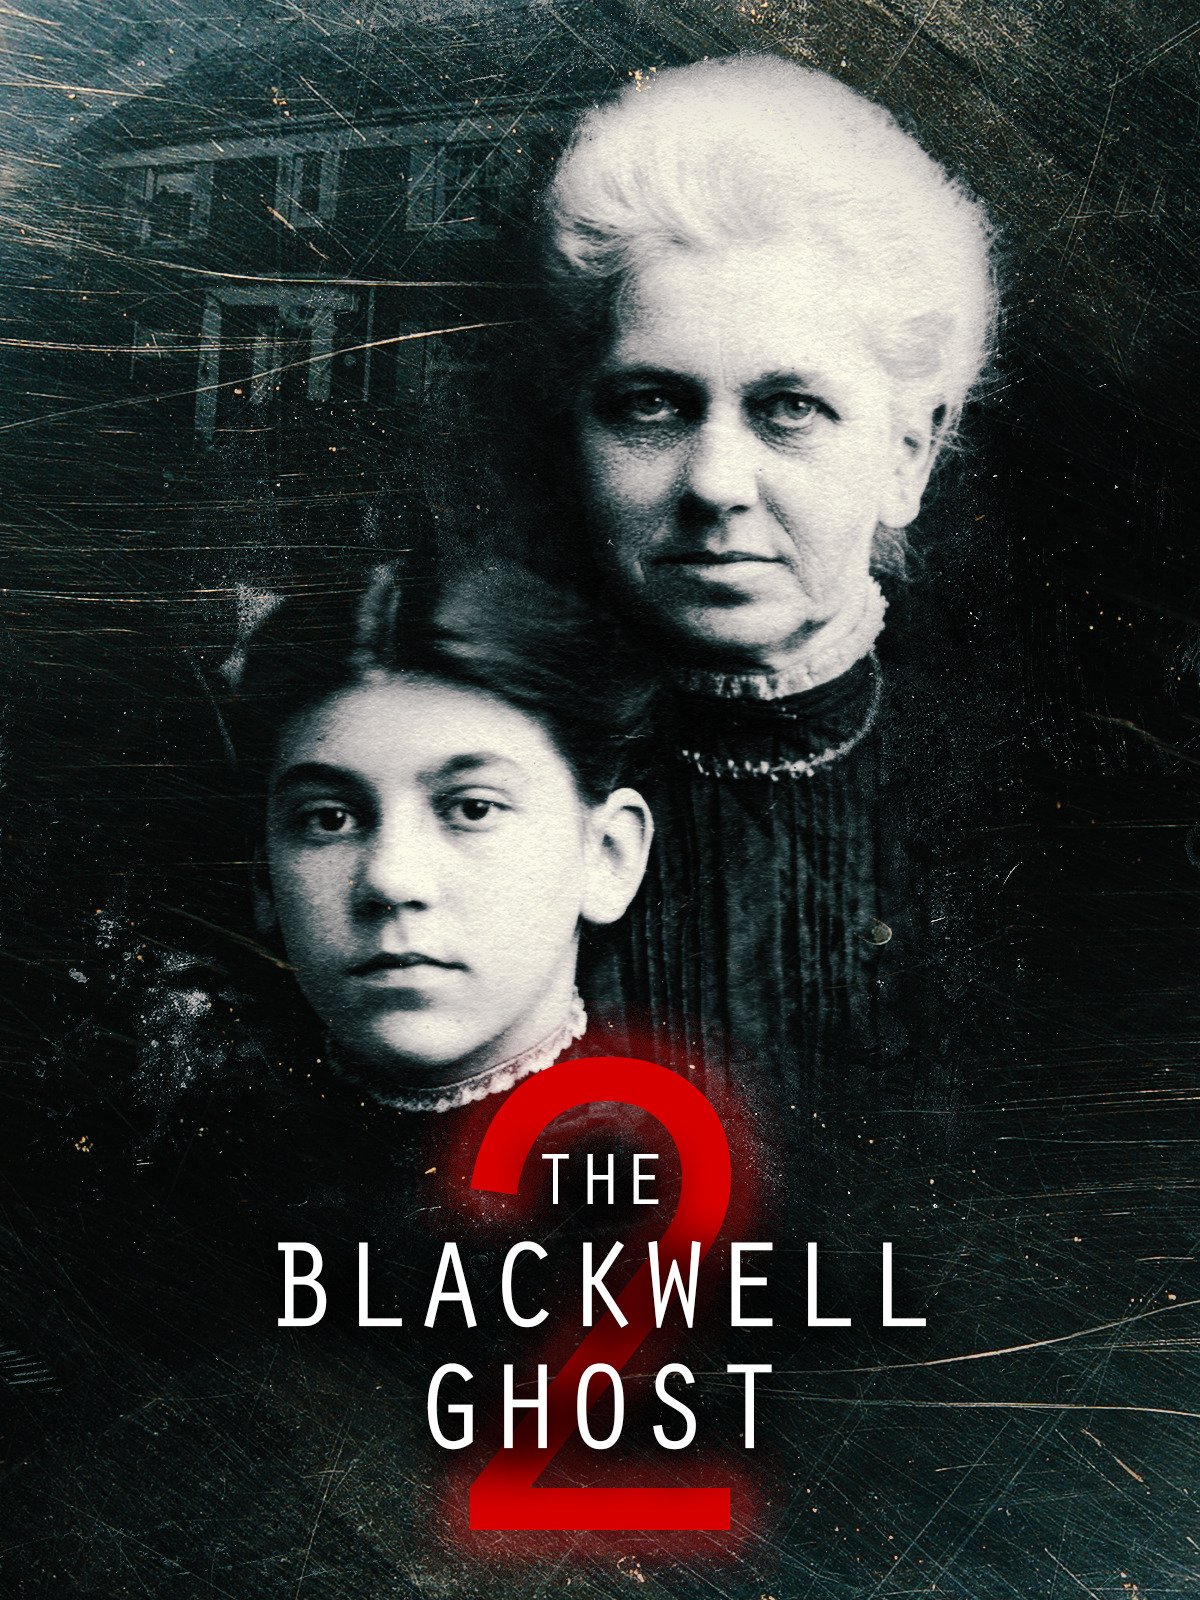 Nonton film The Blackwell Ghost 2 layarkaca21 indoxx1 ganool online streaming terbaru